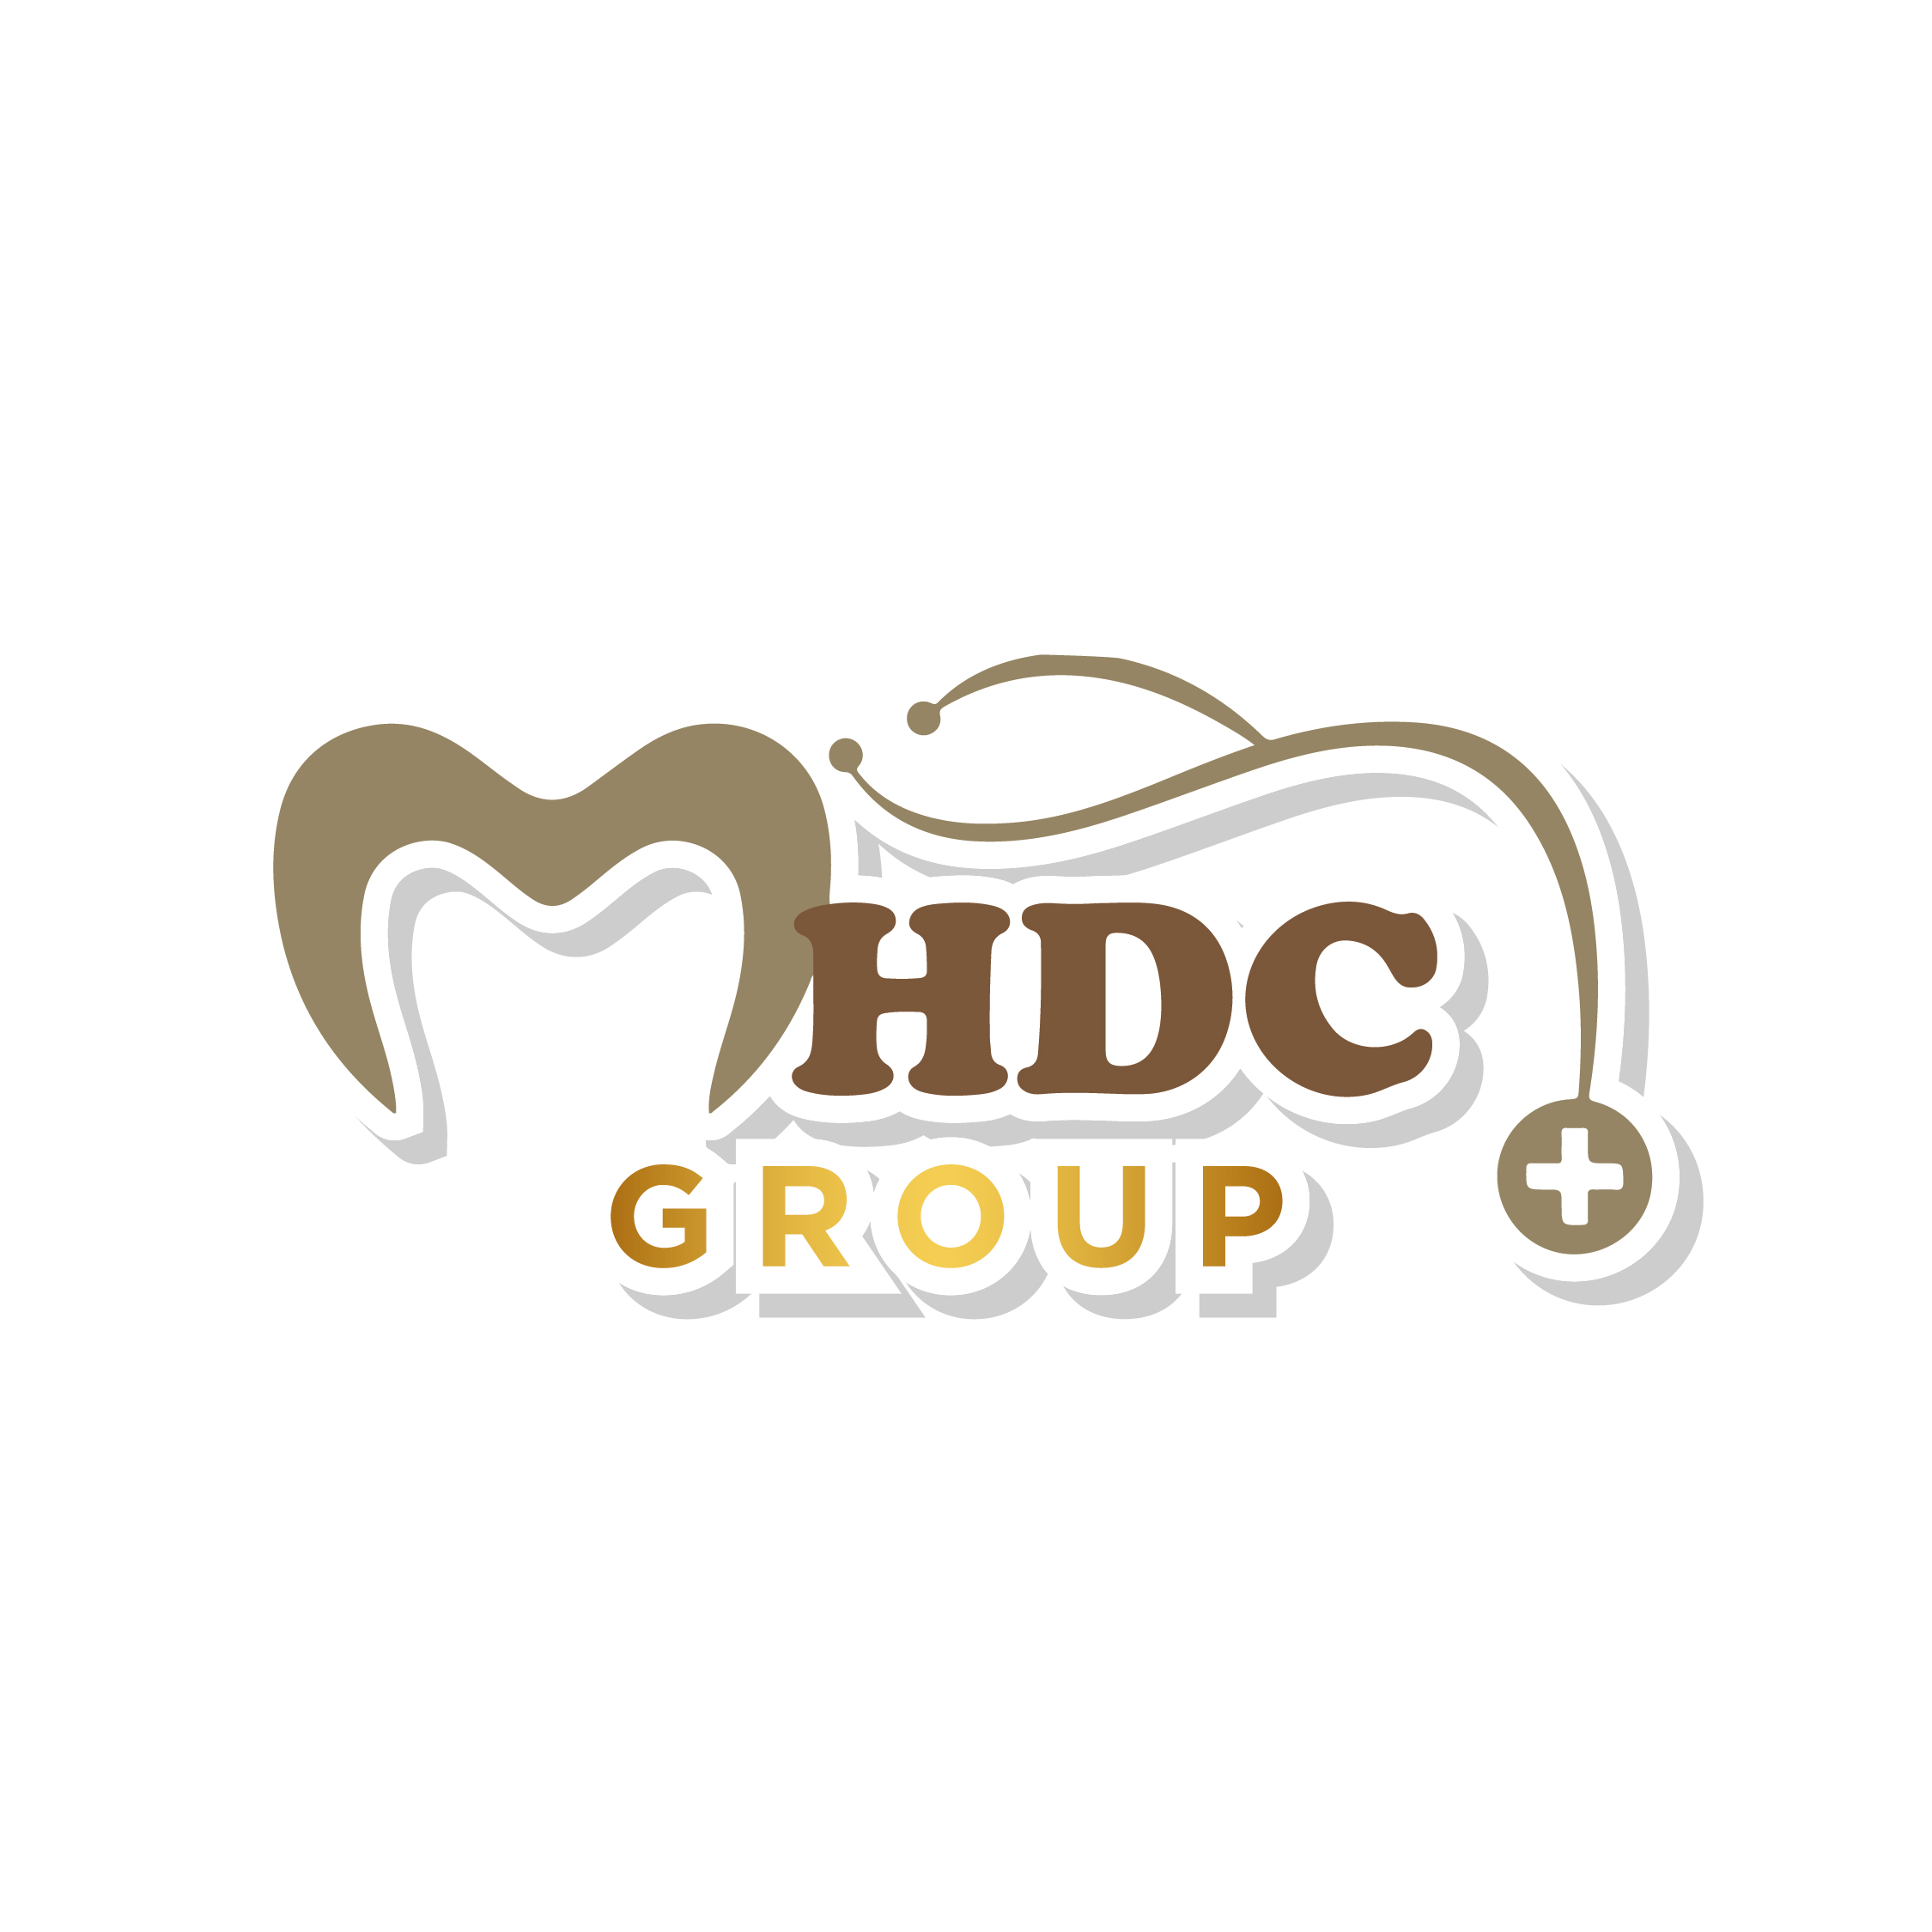 MHDC Group Clinic